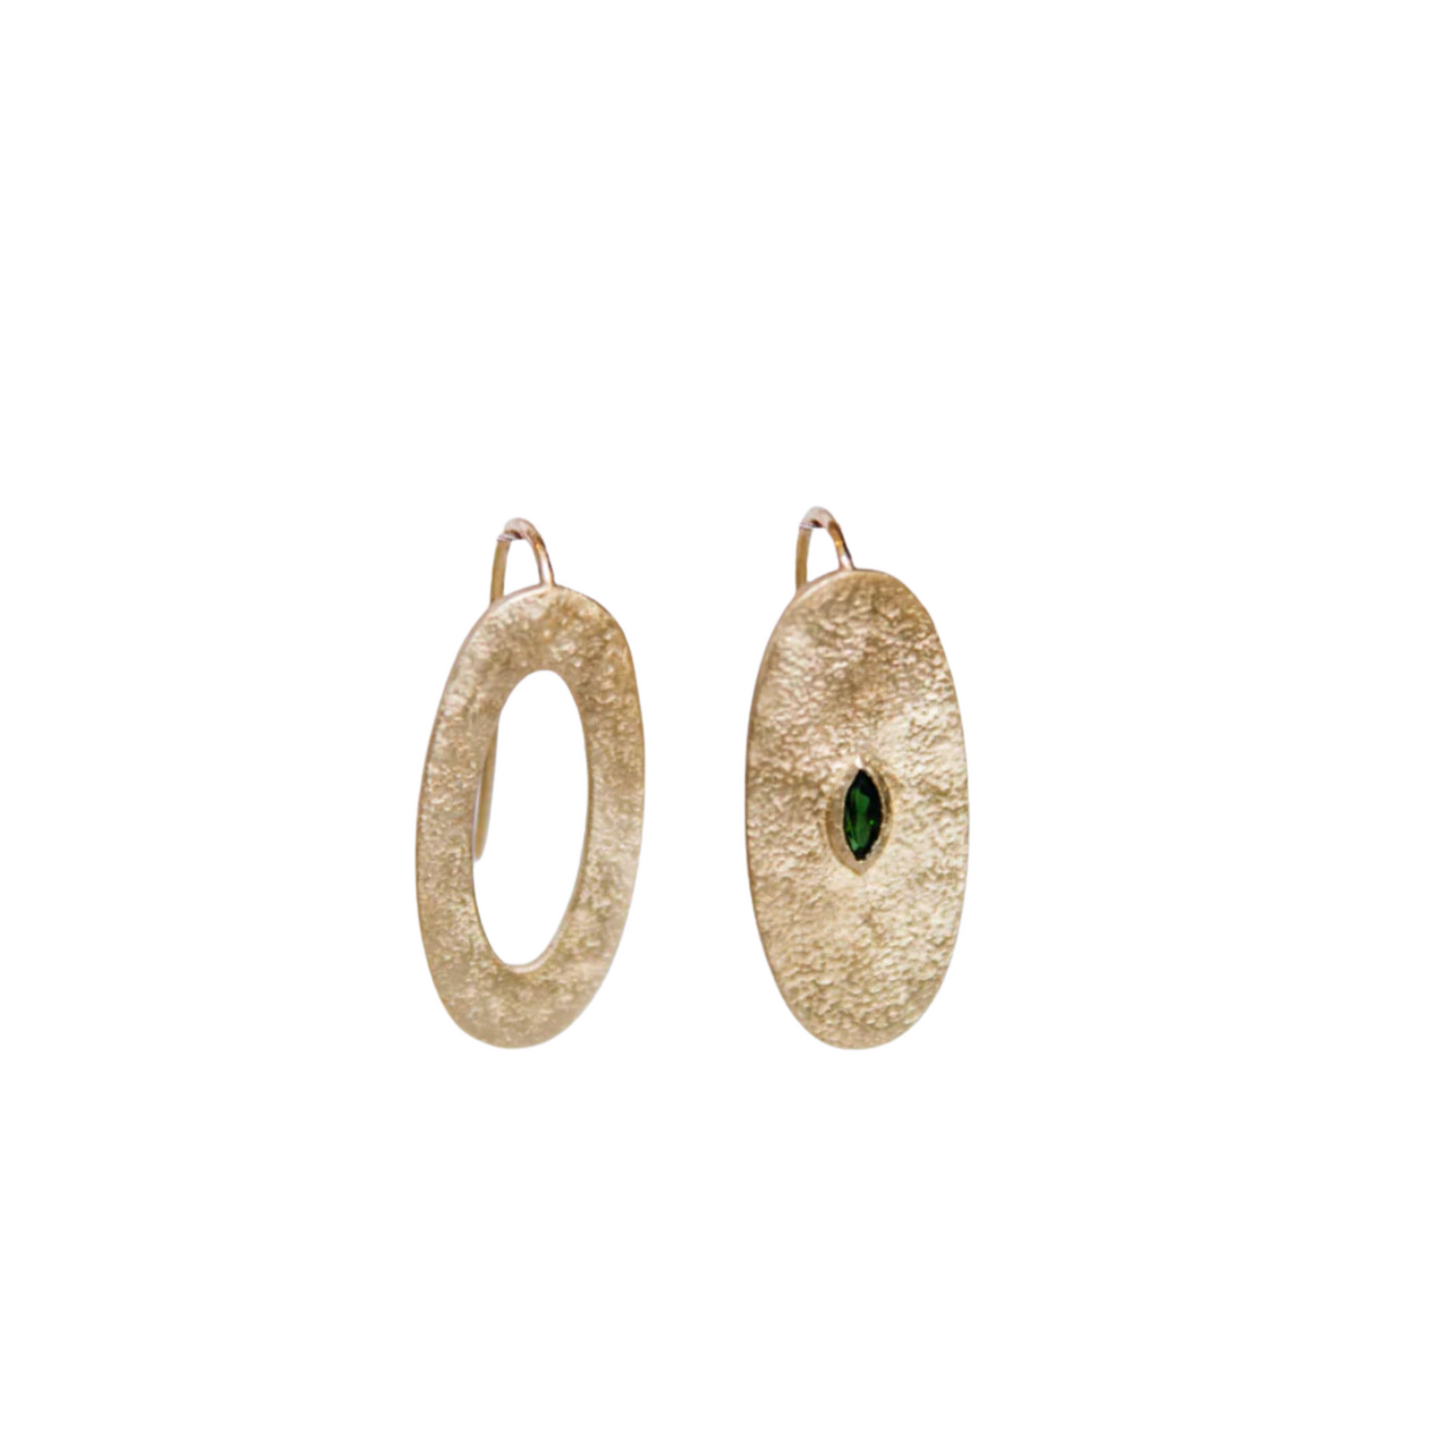 Oval Dangle Earrings with Green Tourmaline